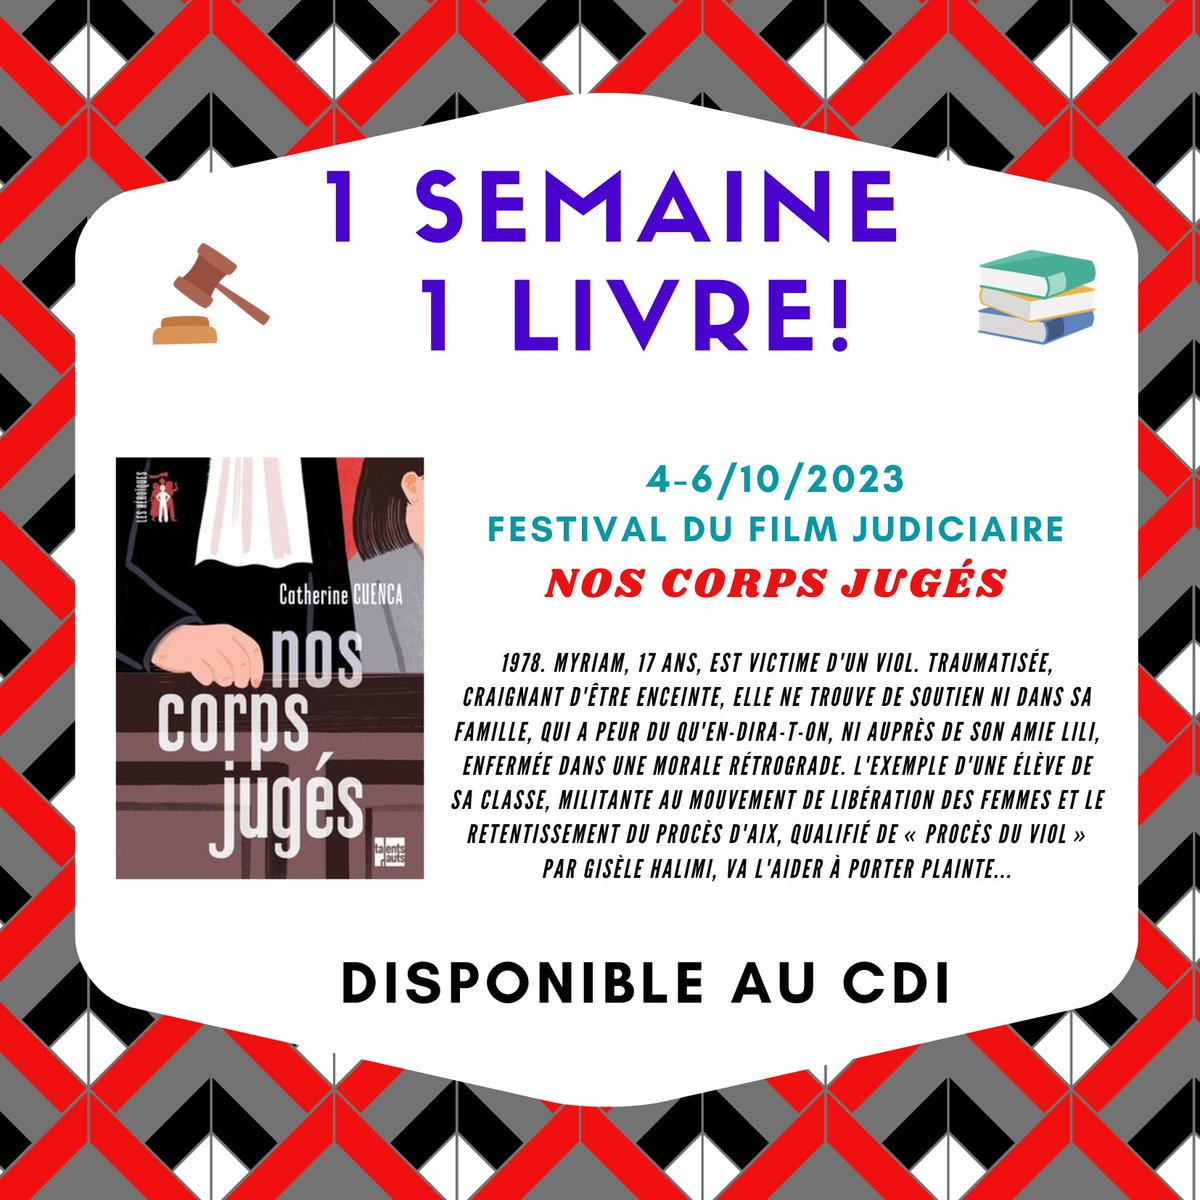 📚 Une semaine, 1 livre #Justice #Droit #Lanuitdudroit #SaintQuentin #CDI #LaRamée #FestivalduFilmJudiciaire